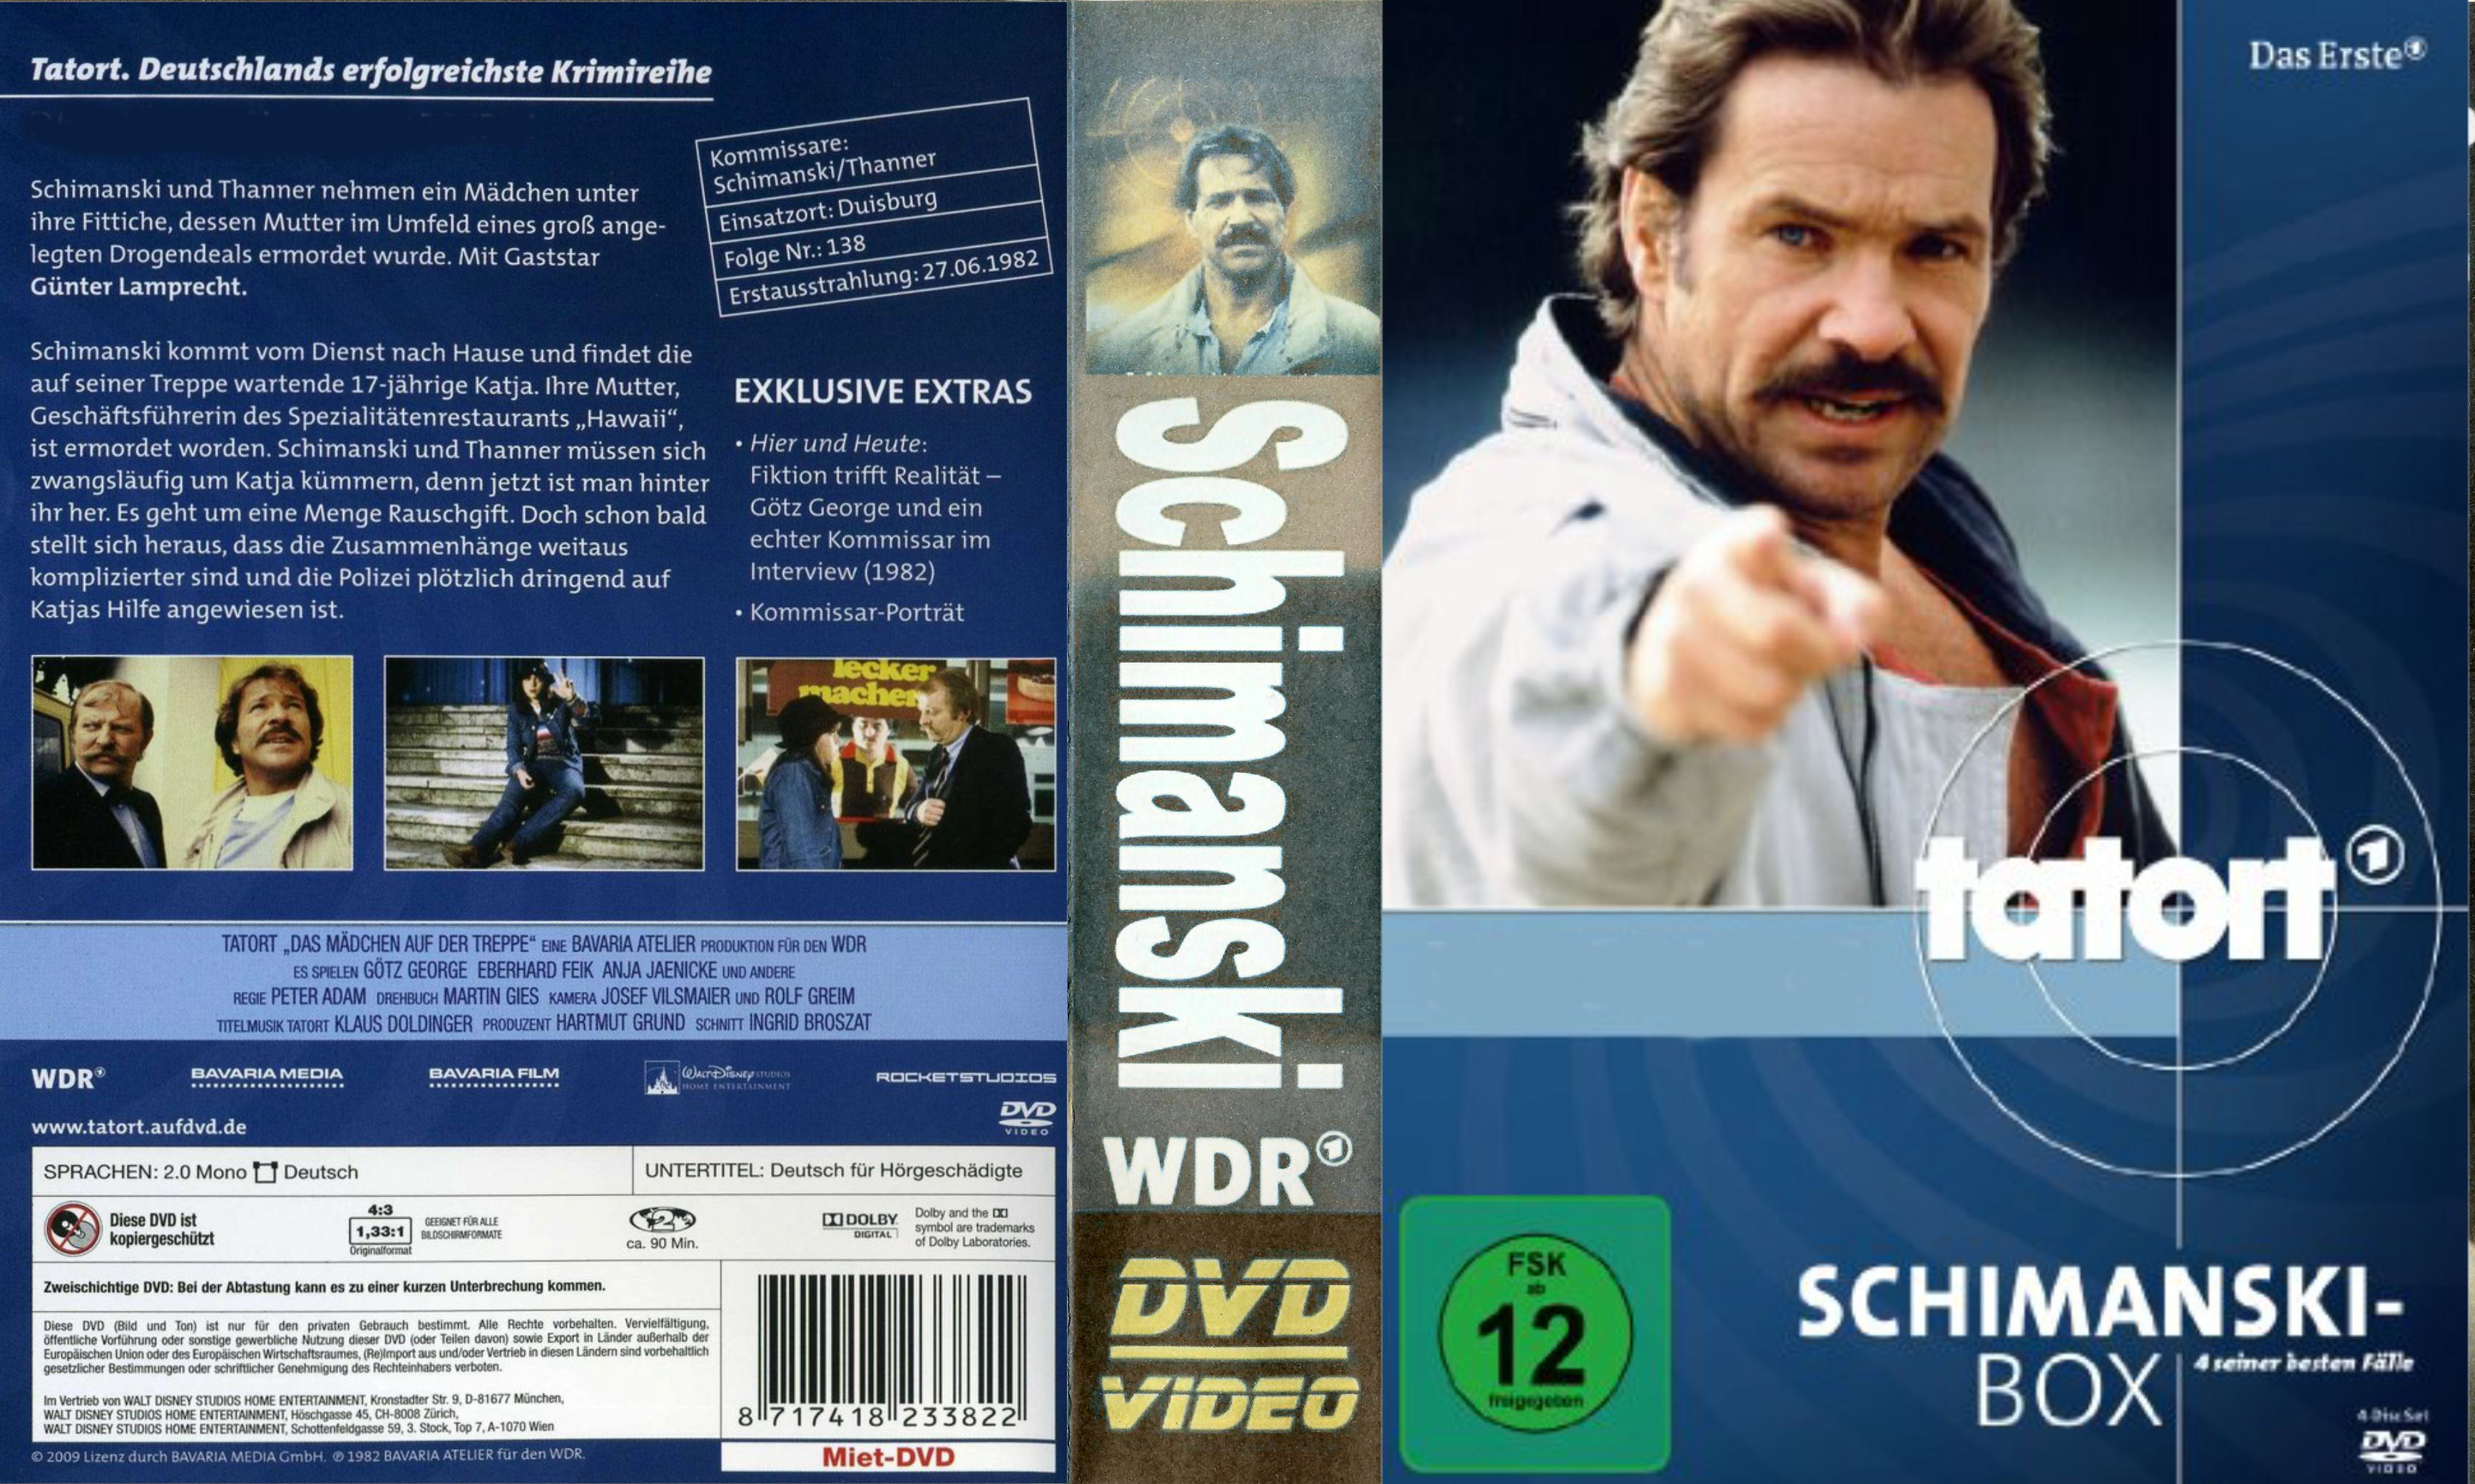 Schimanski Collectie Tatort No Subs - DvD 5